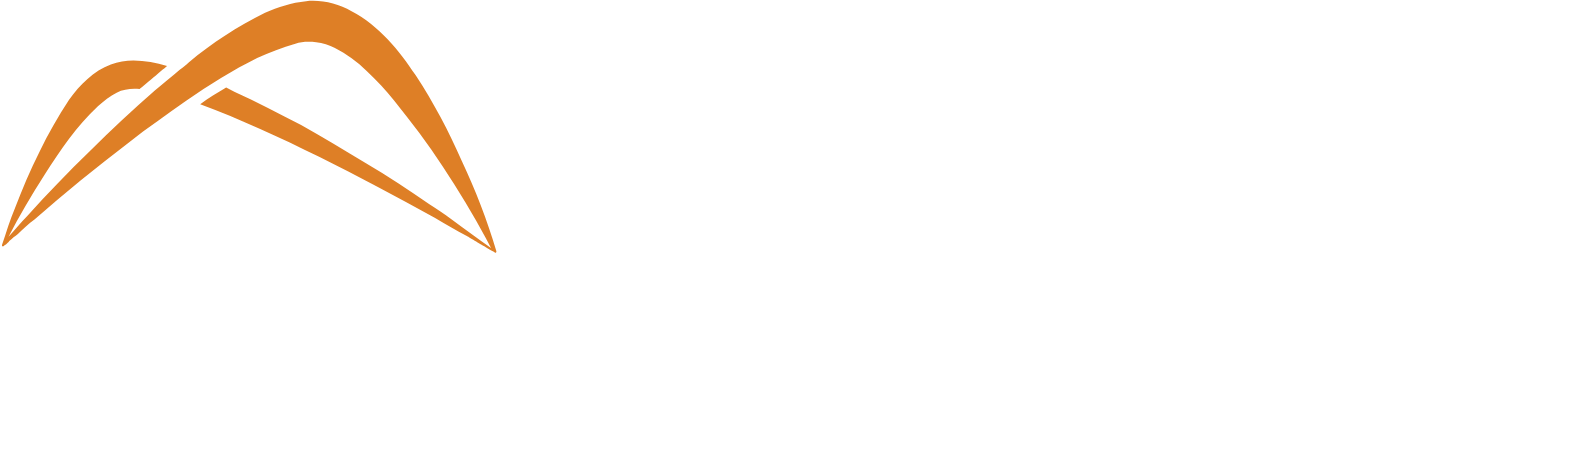 MP Materials logo large for dark backgrounds (transparent PNG)